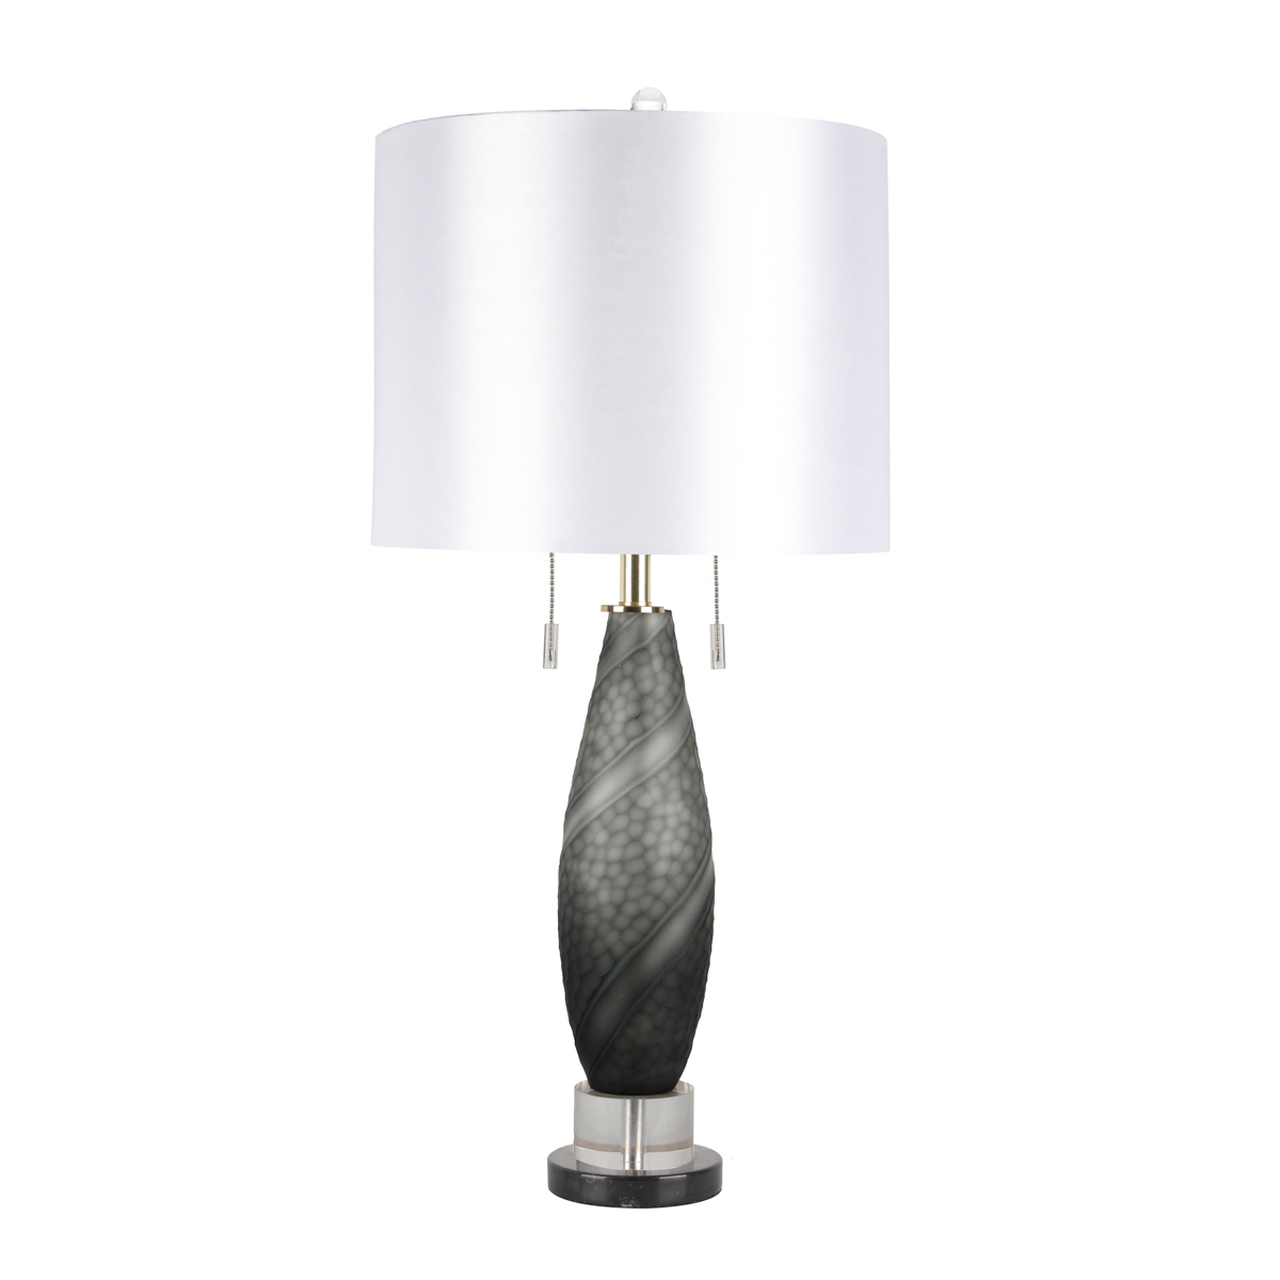 Art Glass 33 inch Twist Table Lamp, Gray